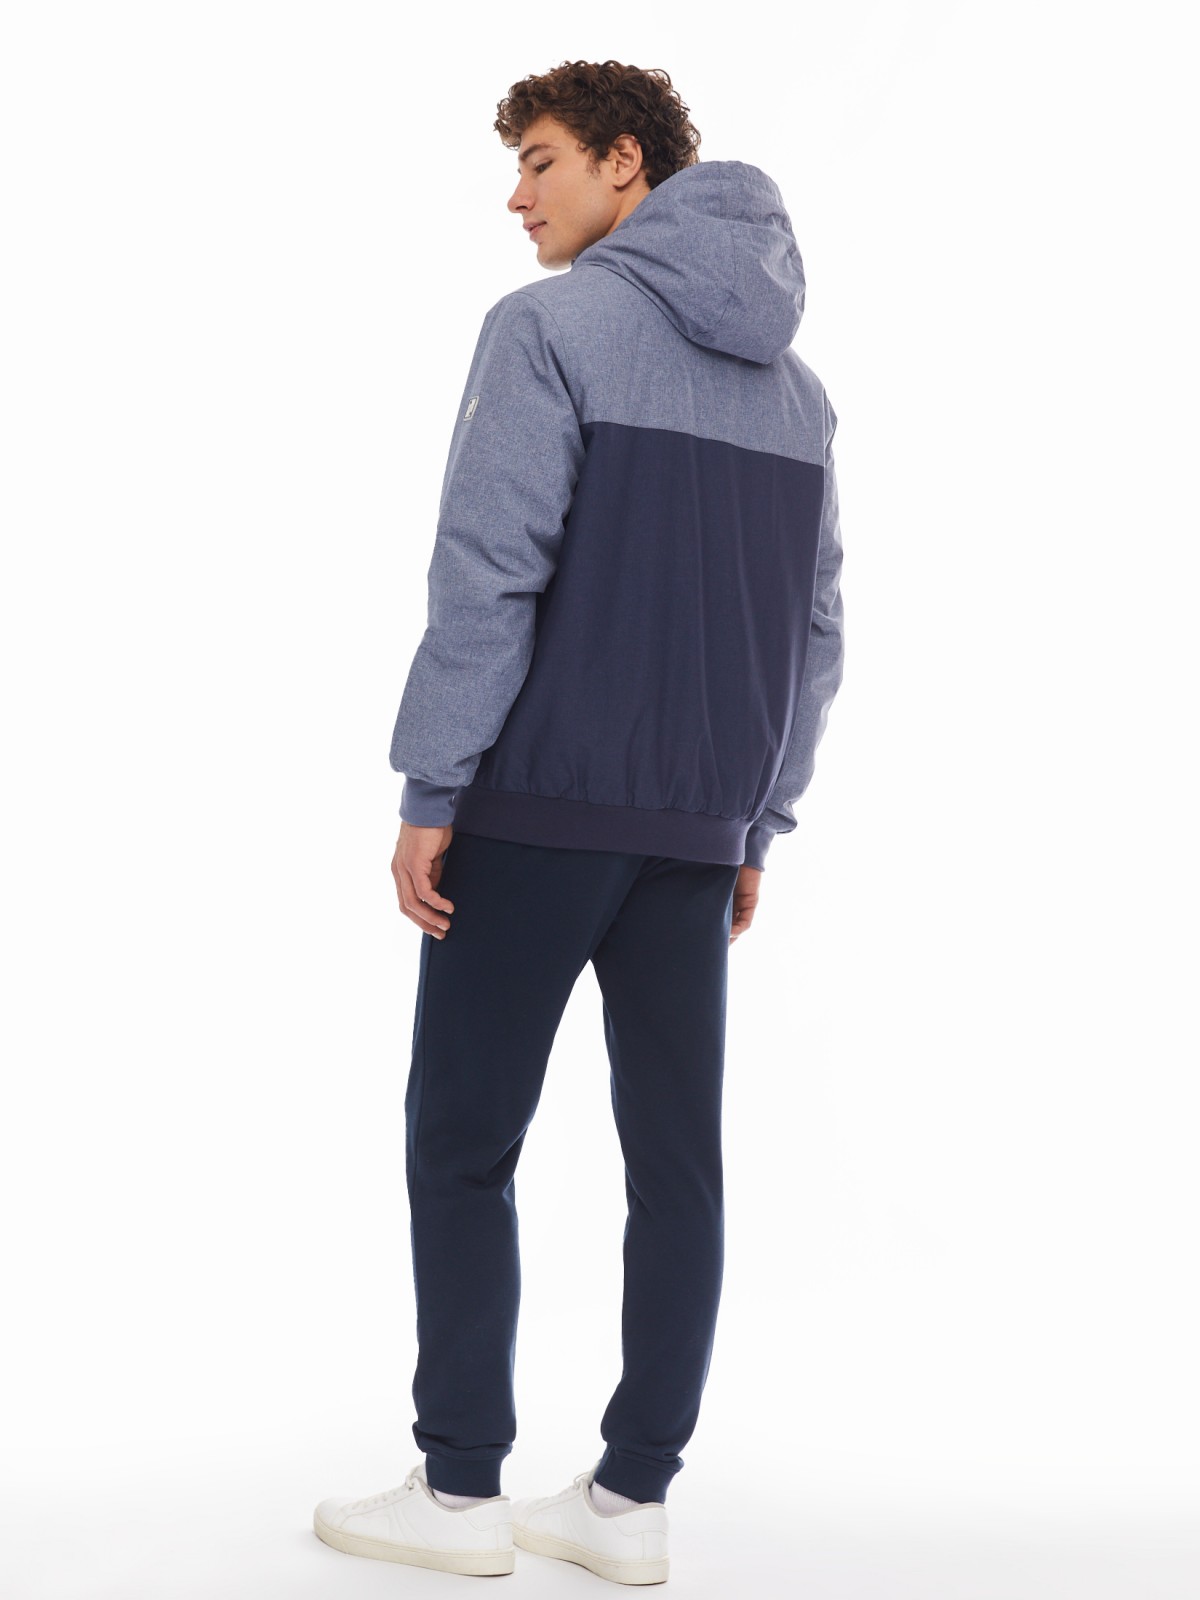 Утеплённая куртка-бомбер на синтепоне с капюшоном zolla 01412510L014, цвет синий, размер M - фото 6